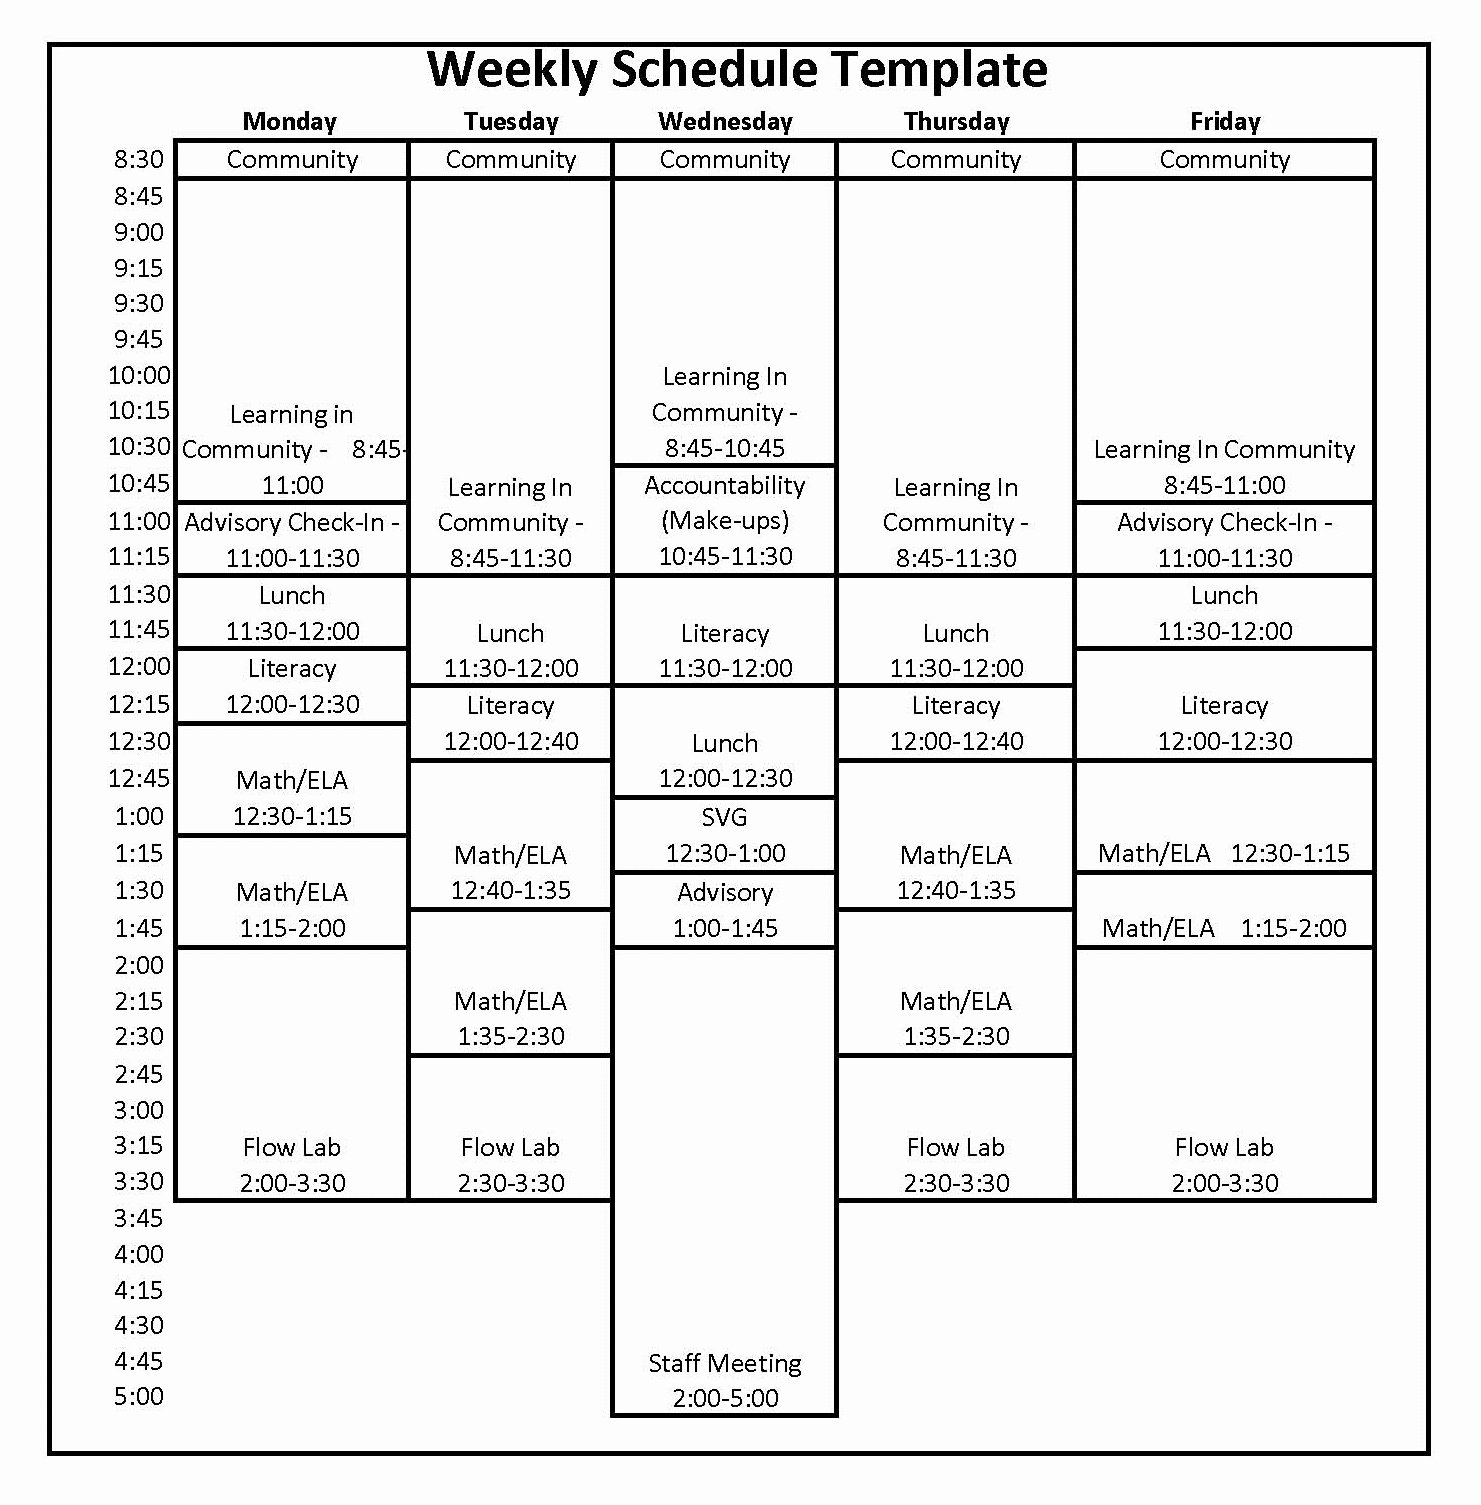 Weekly Schedule Template Pdf Best Of Weekly Schedule